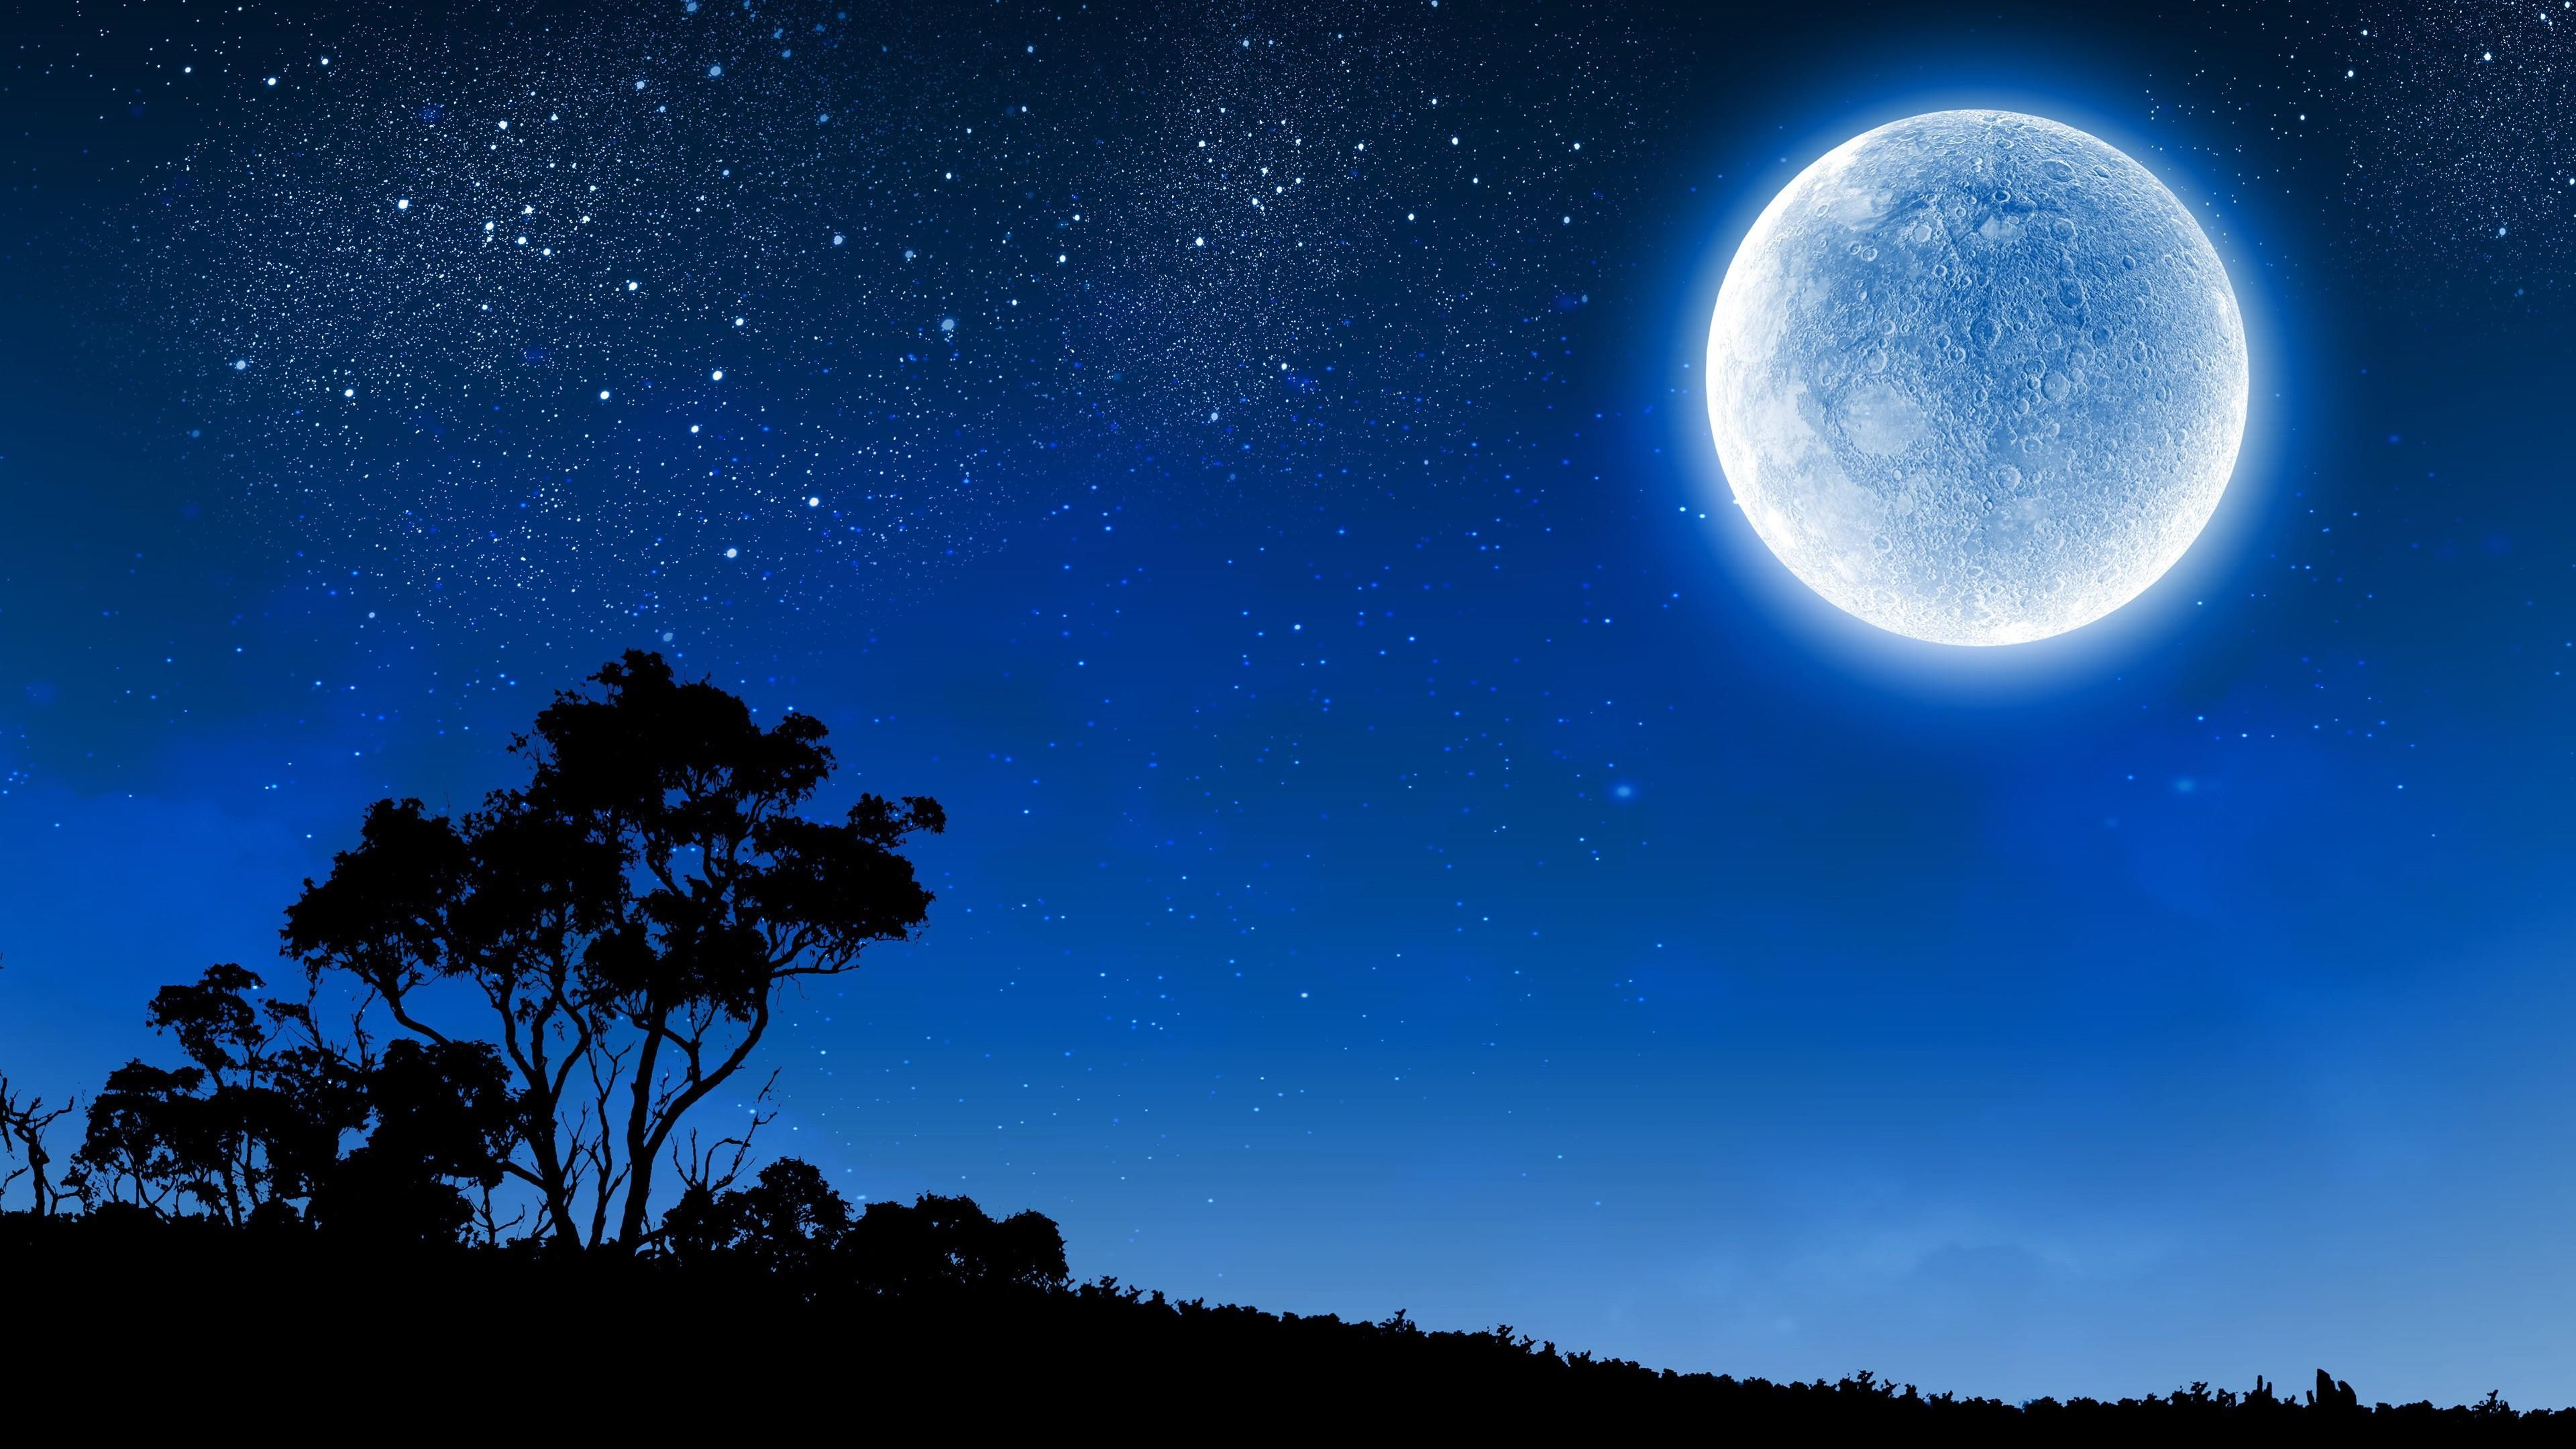 3840x2160 moon full moon #night night sky #starry #silhouette starry night #4K # wallpaper #hdwallpaper #desktop | Starry night wallpaper, Night skies, Moon photography